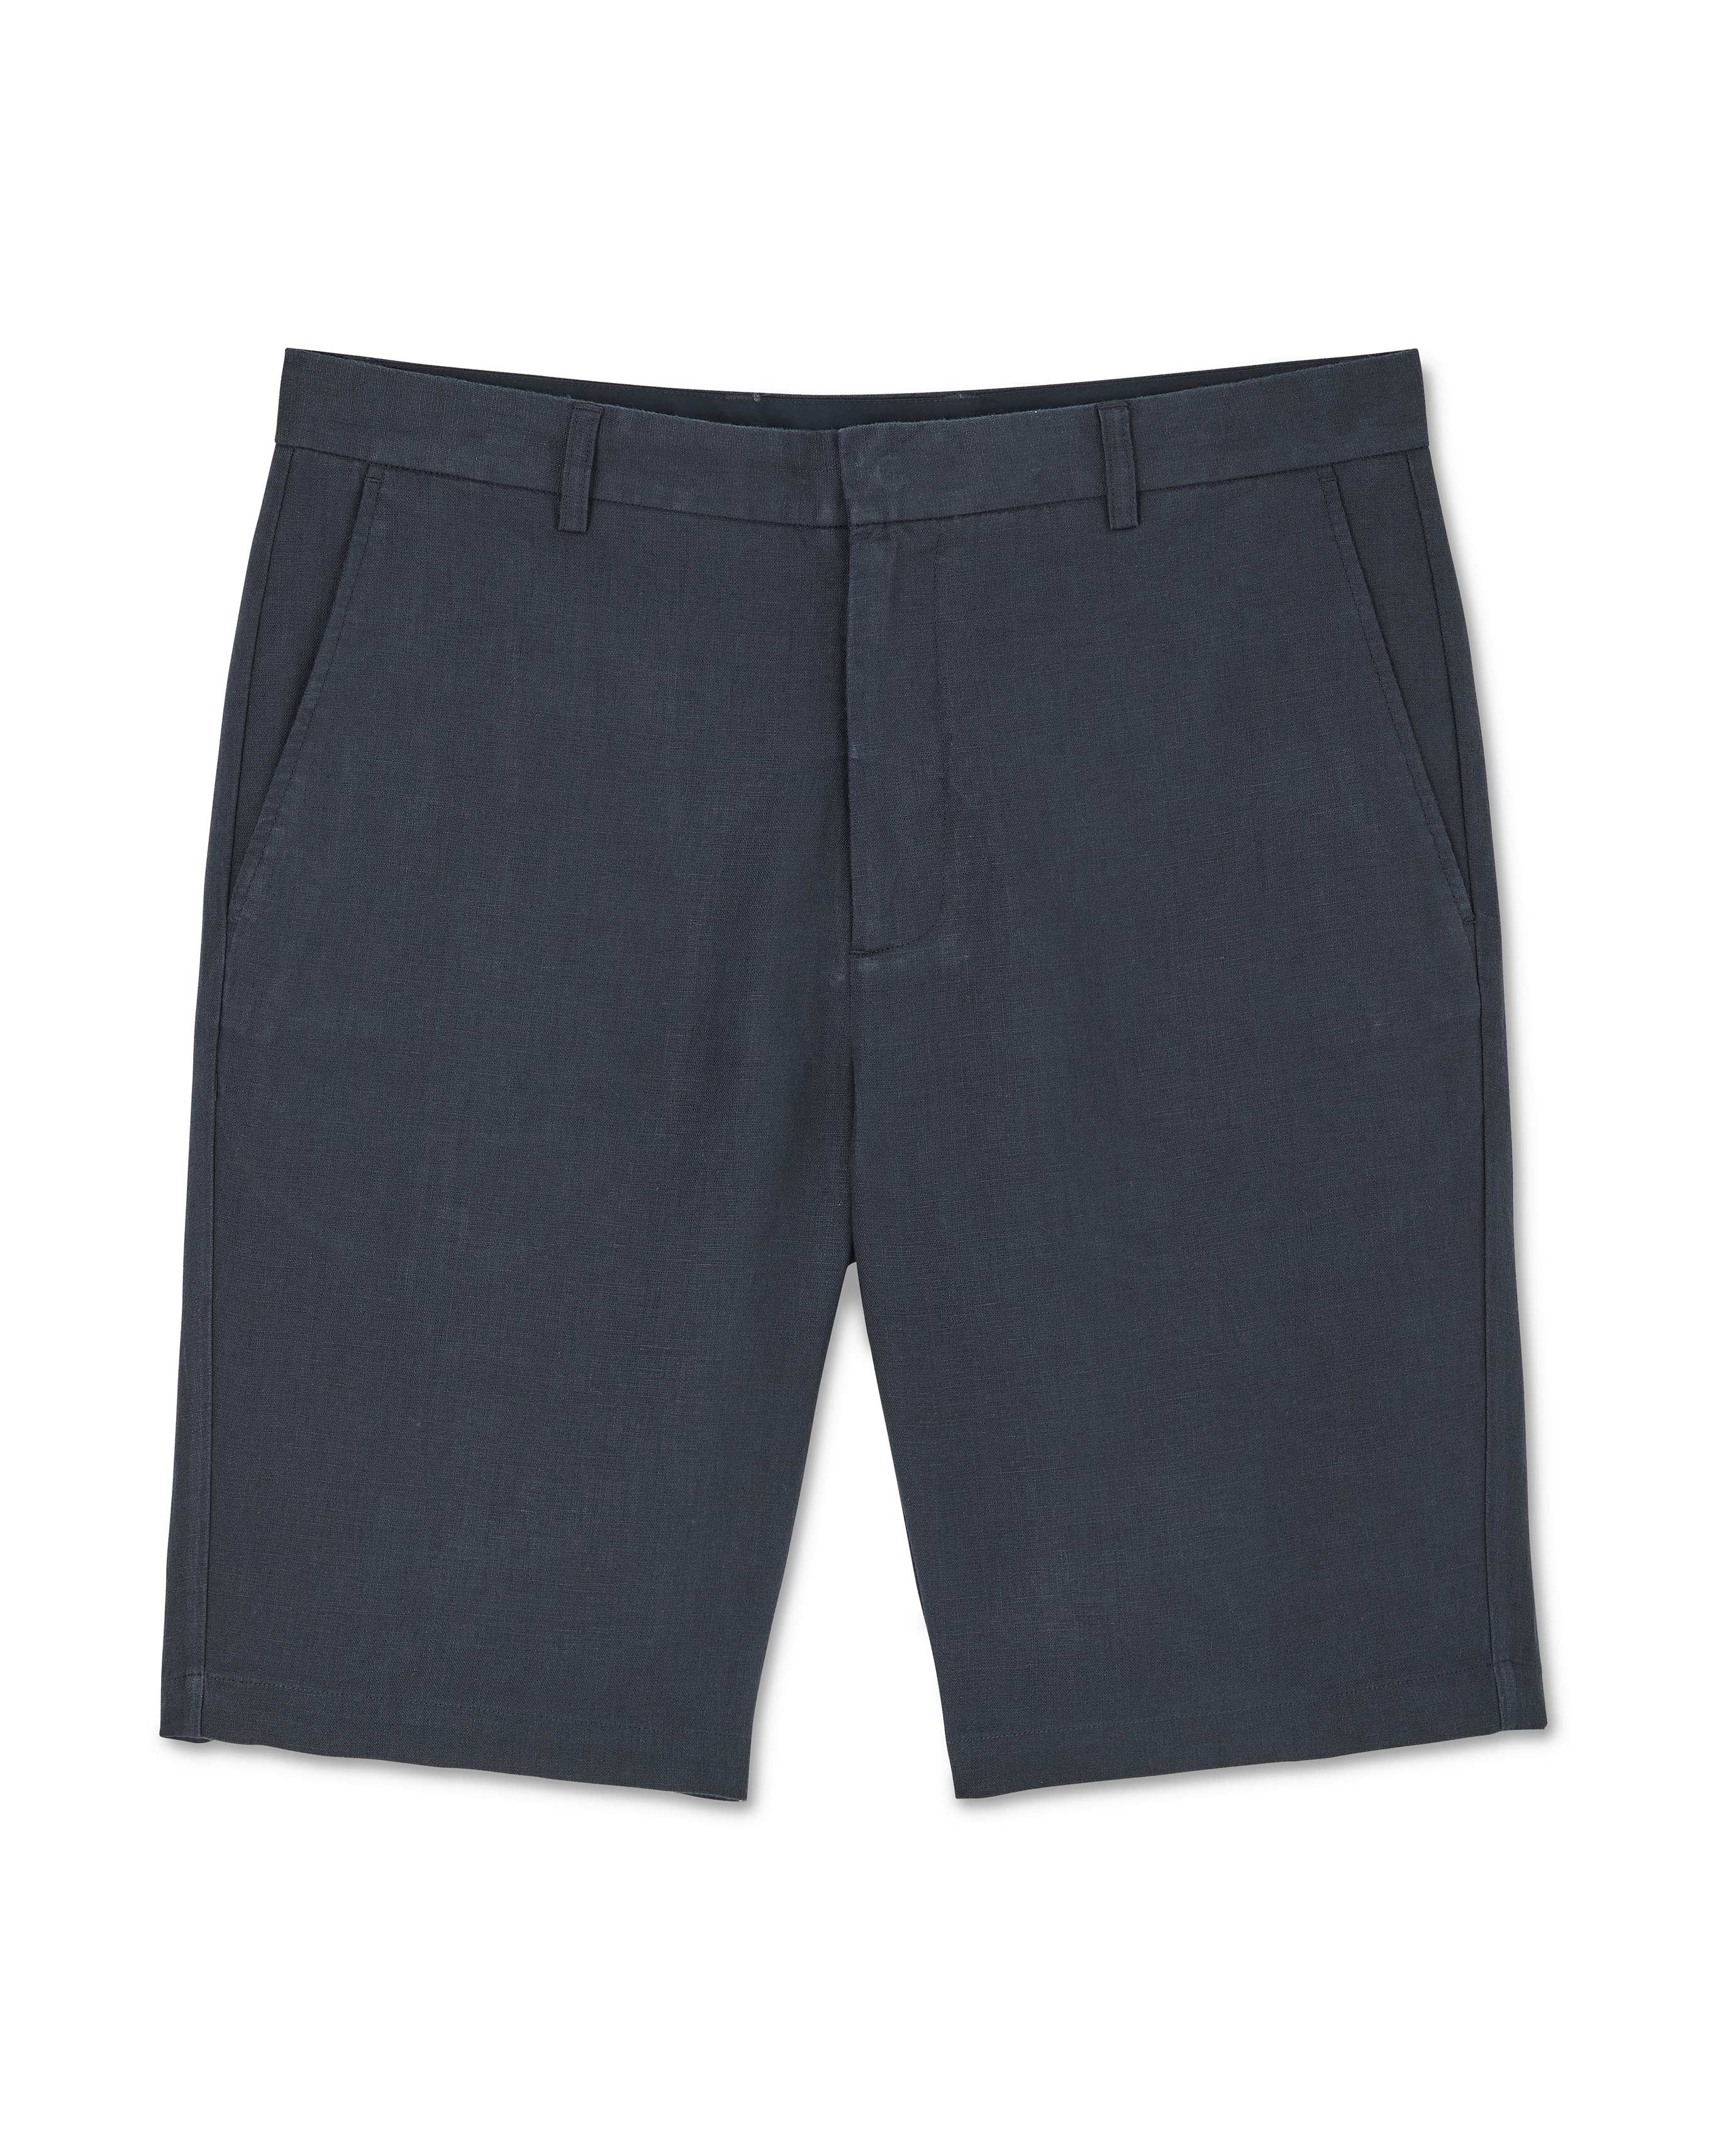 Men's Linen Shorts WATERTON in gray blue, MagicLinen